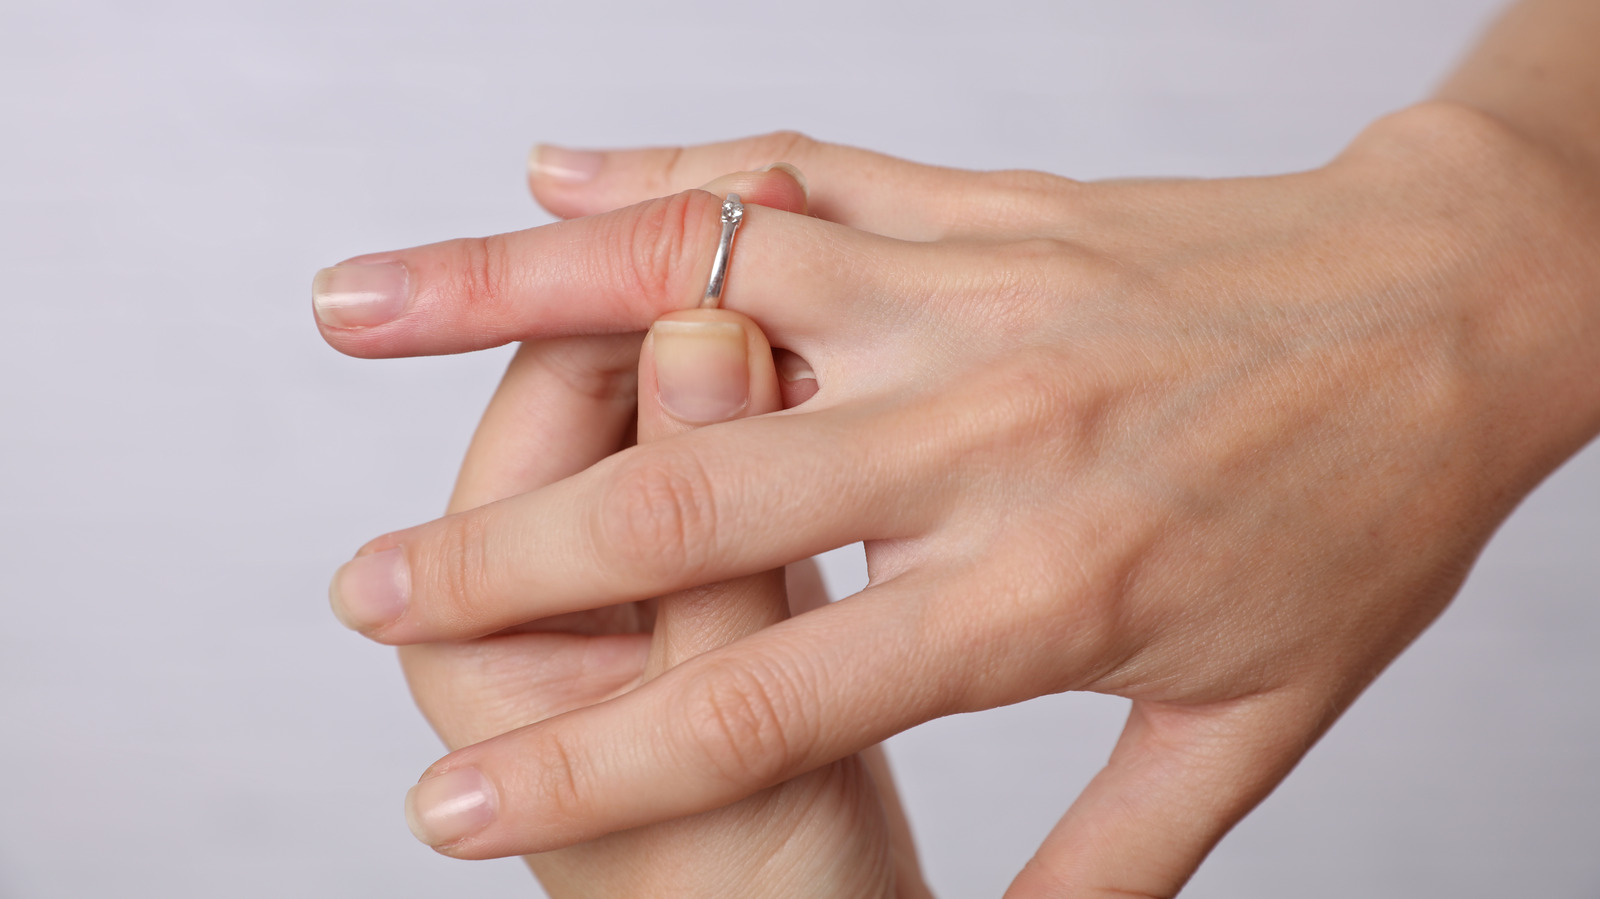 A neat trick gets a stuck ring off a swollen finger - Komando.com